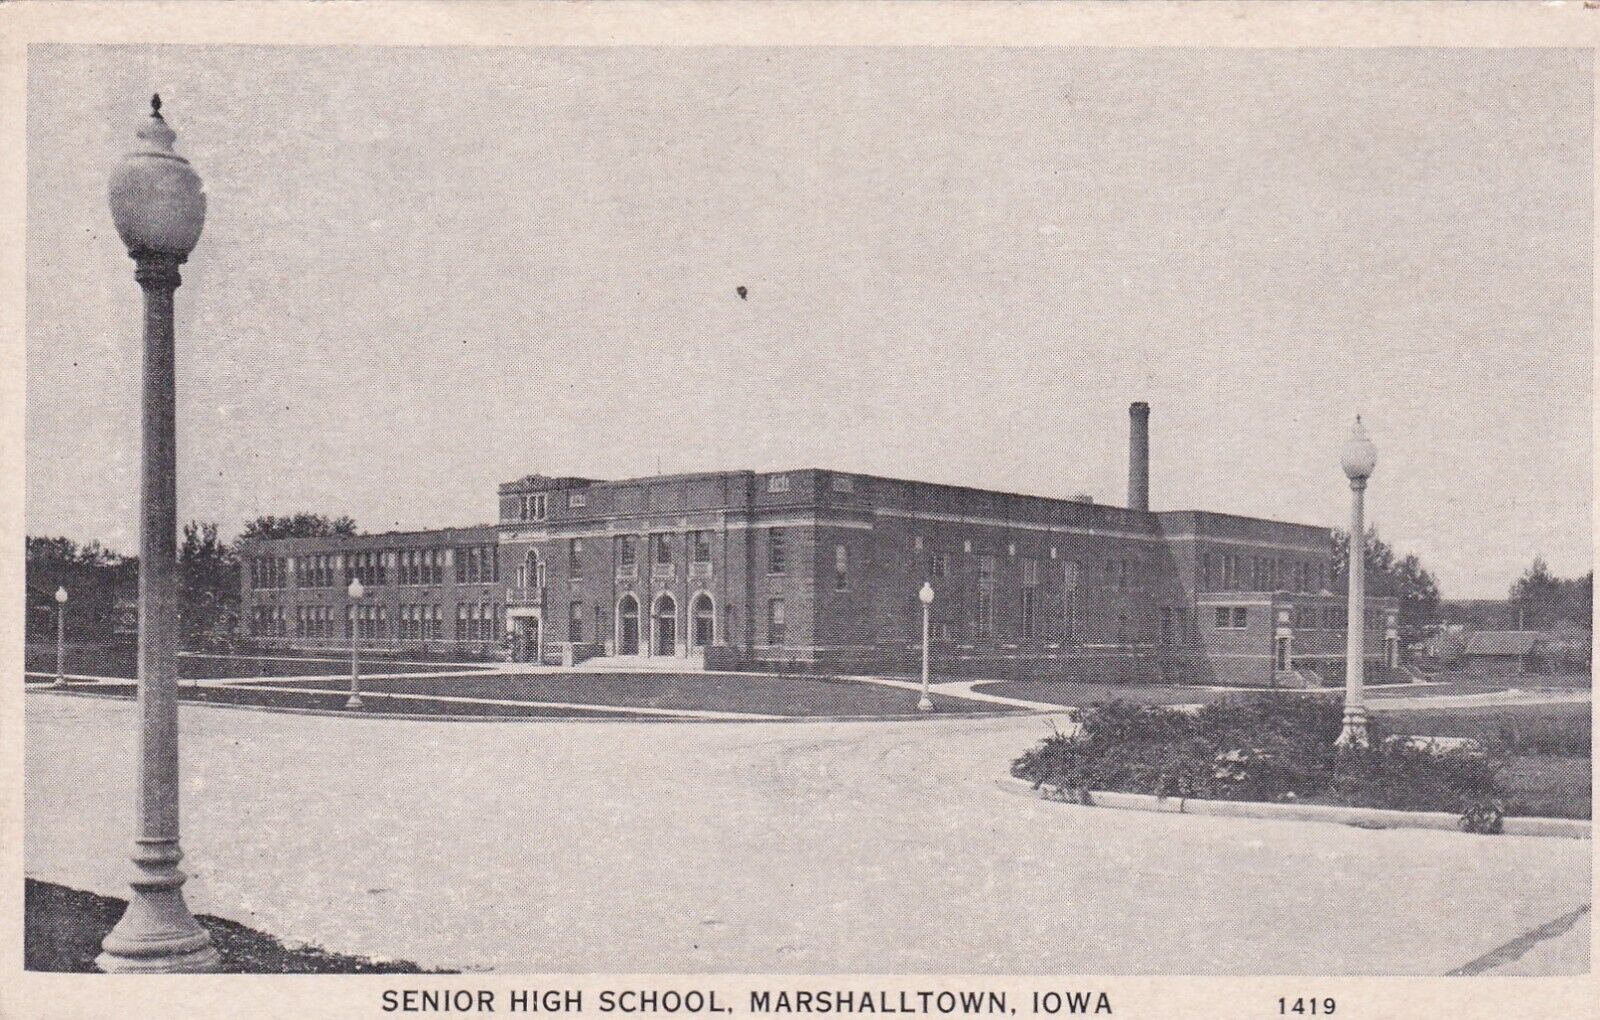 Marshalltown Senior High School, Marshalltown, Iowa - B&W c1938 - Postcard